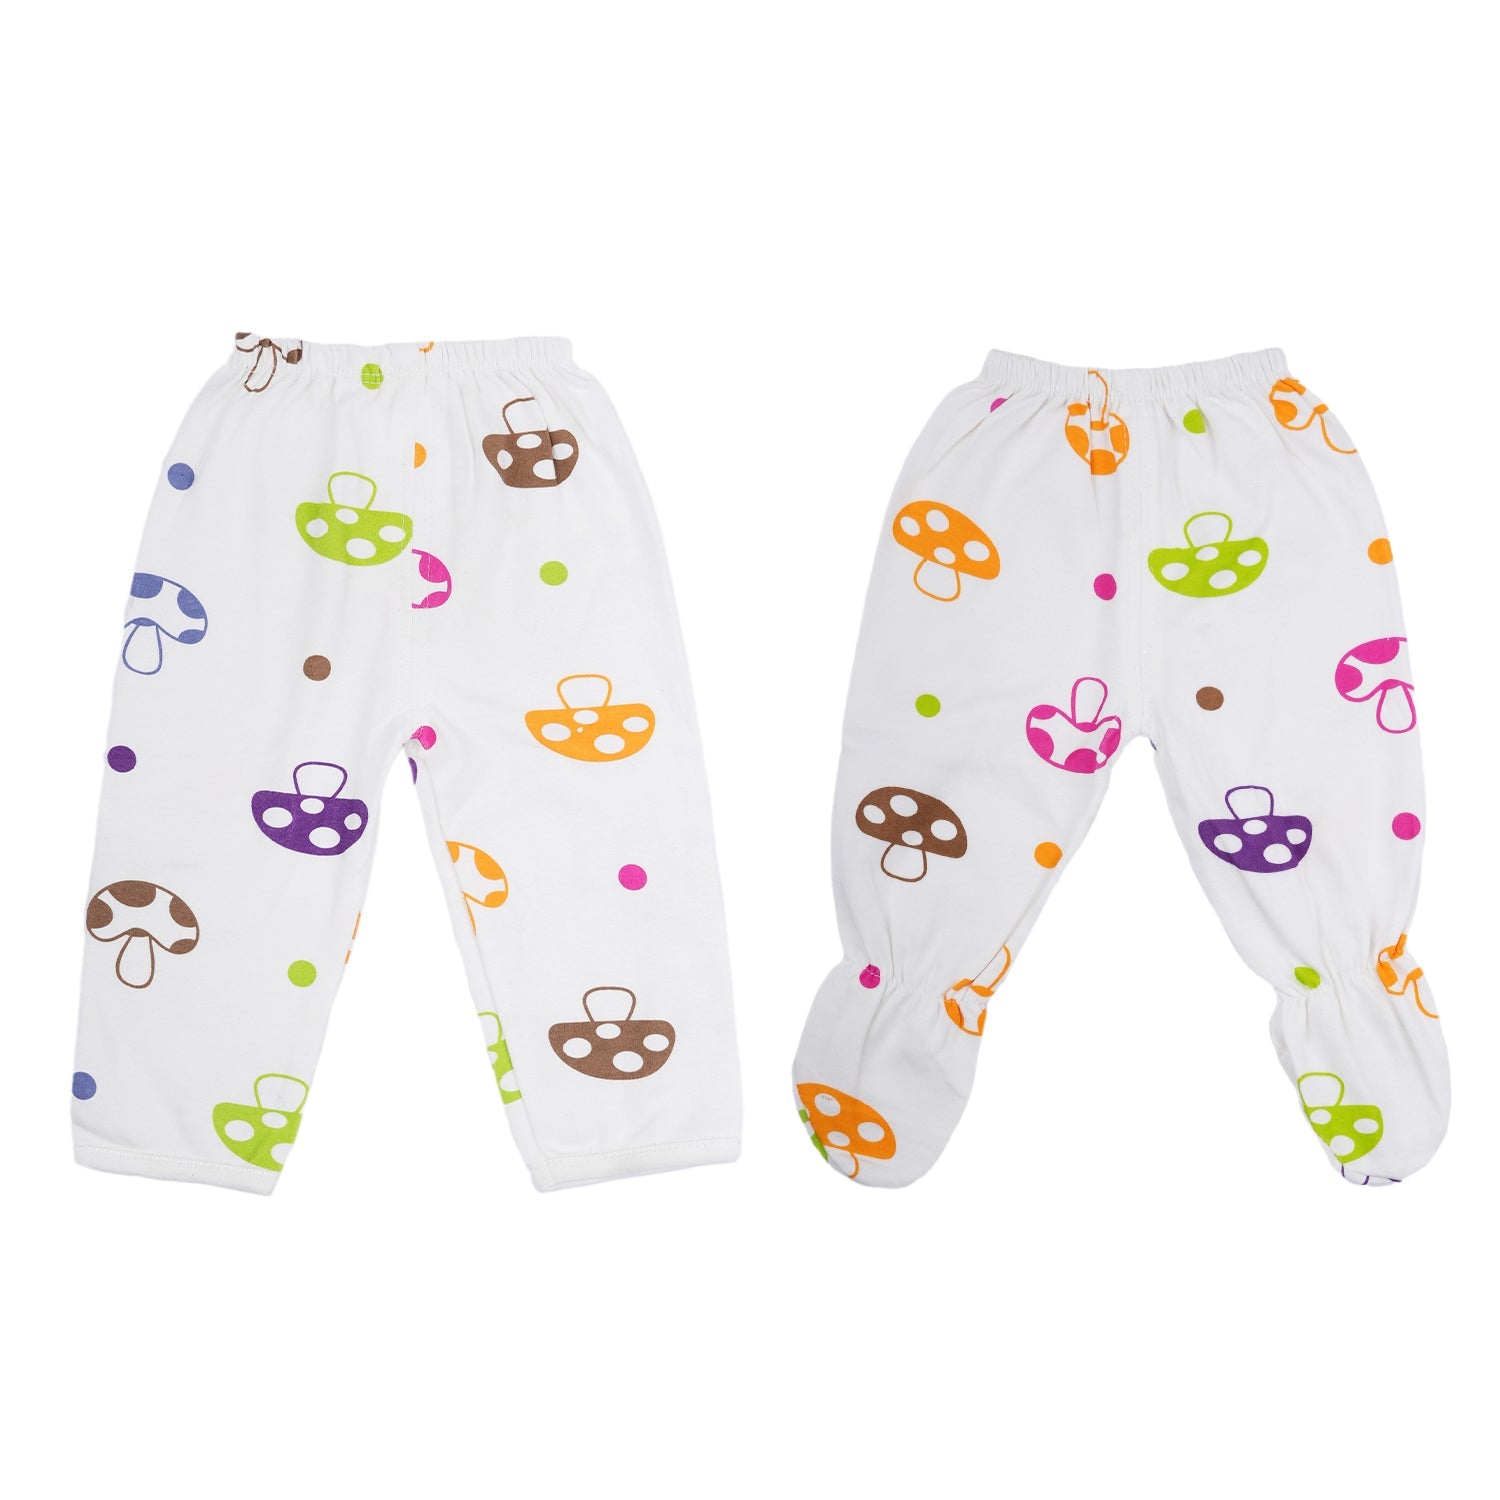 Baby Moo Mushroom Print Cap Bib Pyjamas 5 Pcs Clothing Gift Set - White